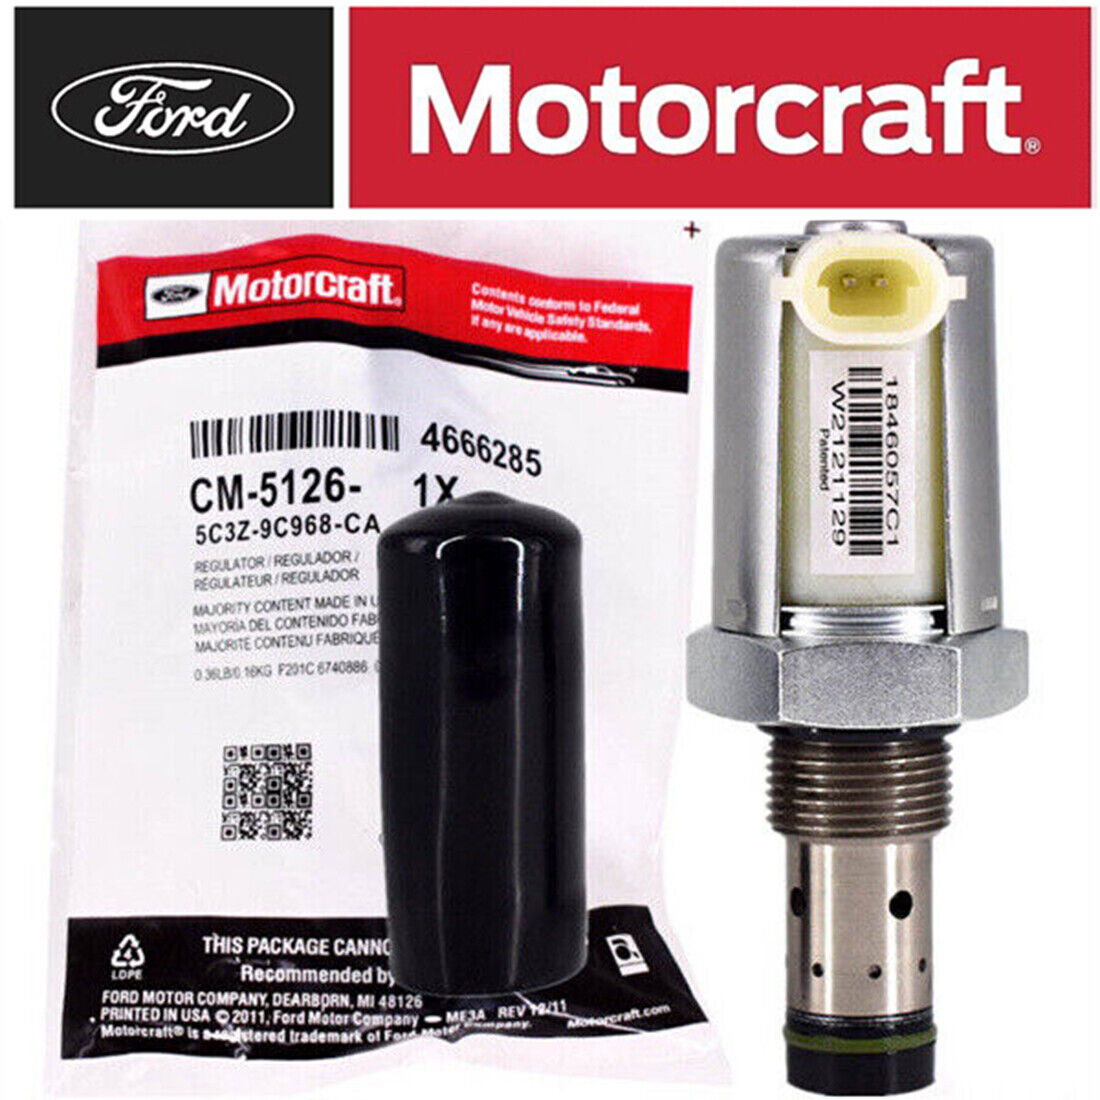 Genuine Ford Motorcraft CM-5126 Fuel Injection Pressure Regulator 5C3Z-9C968-CA